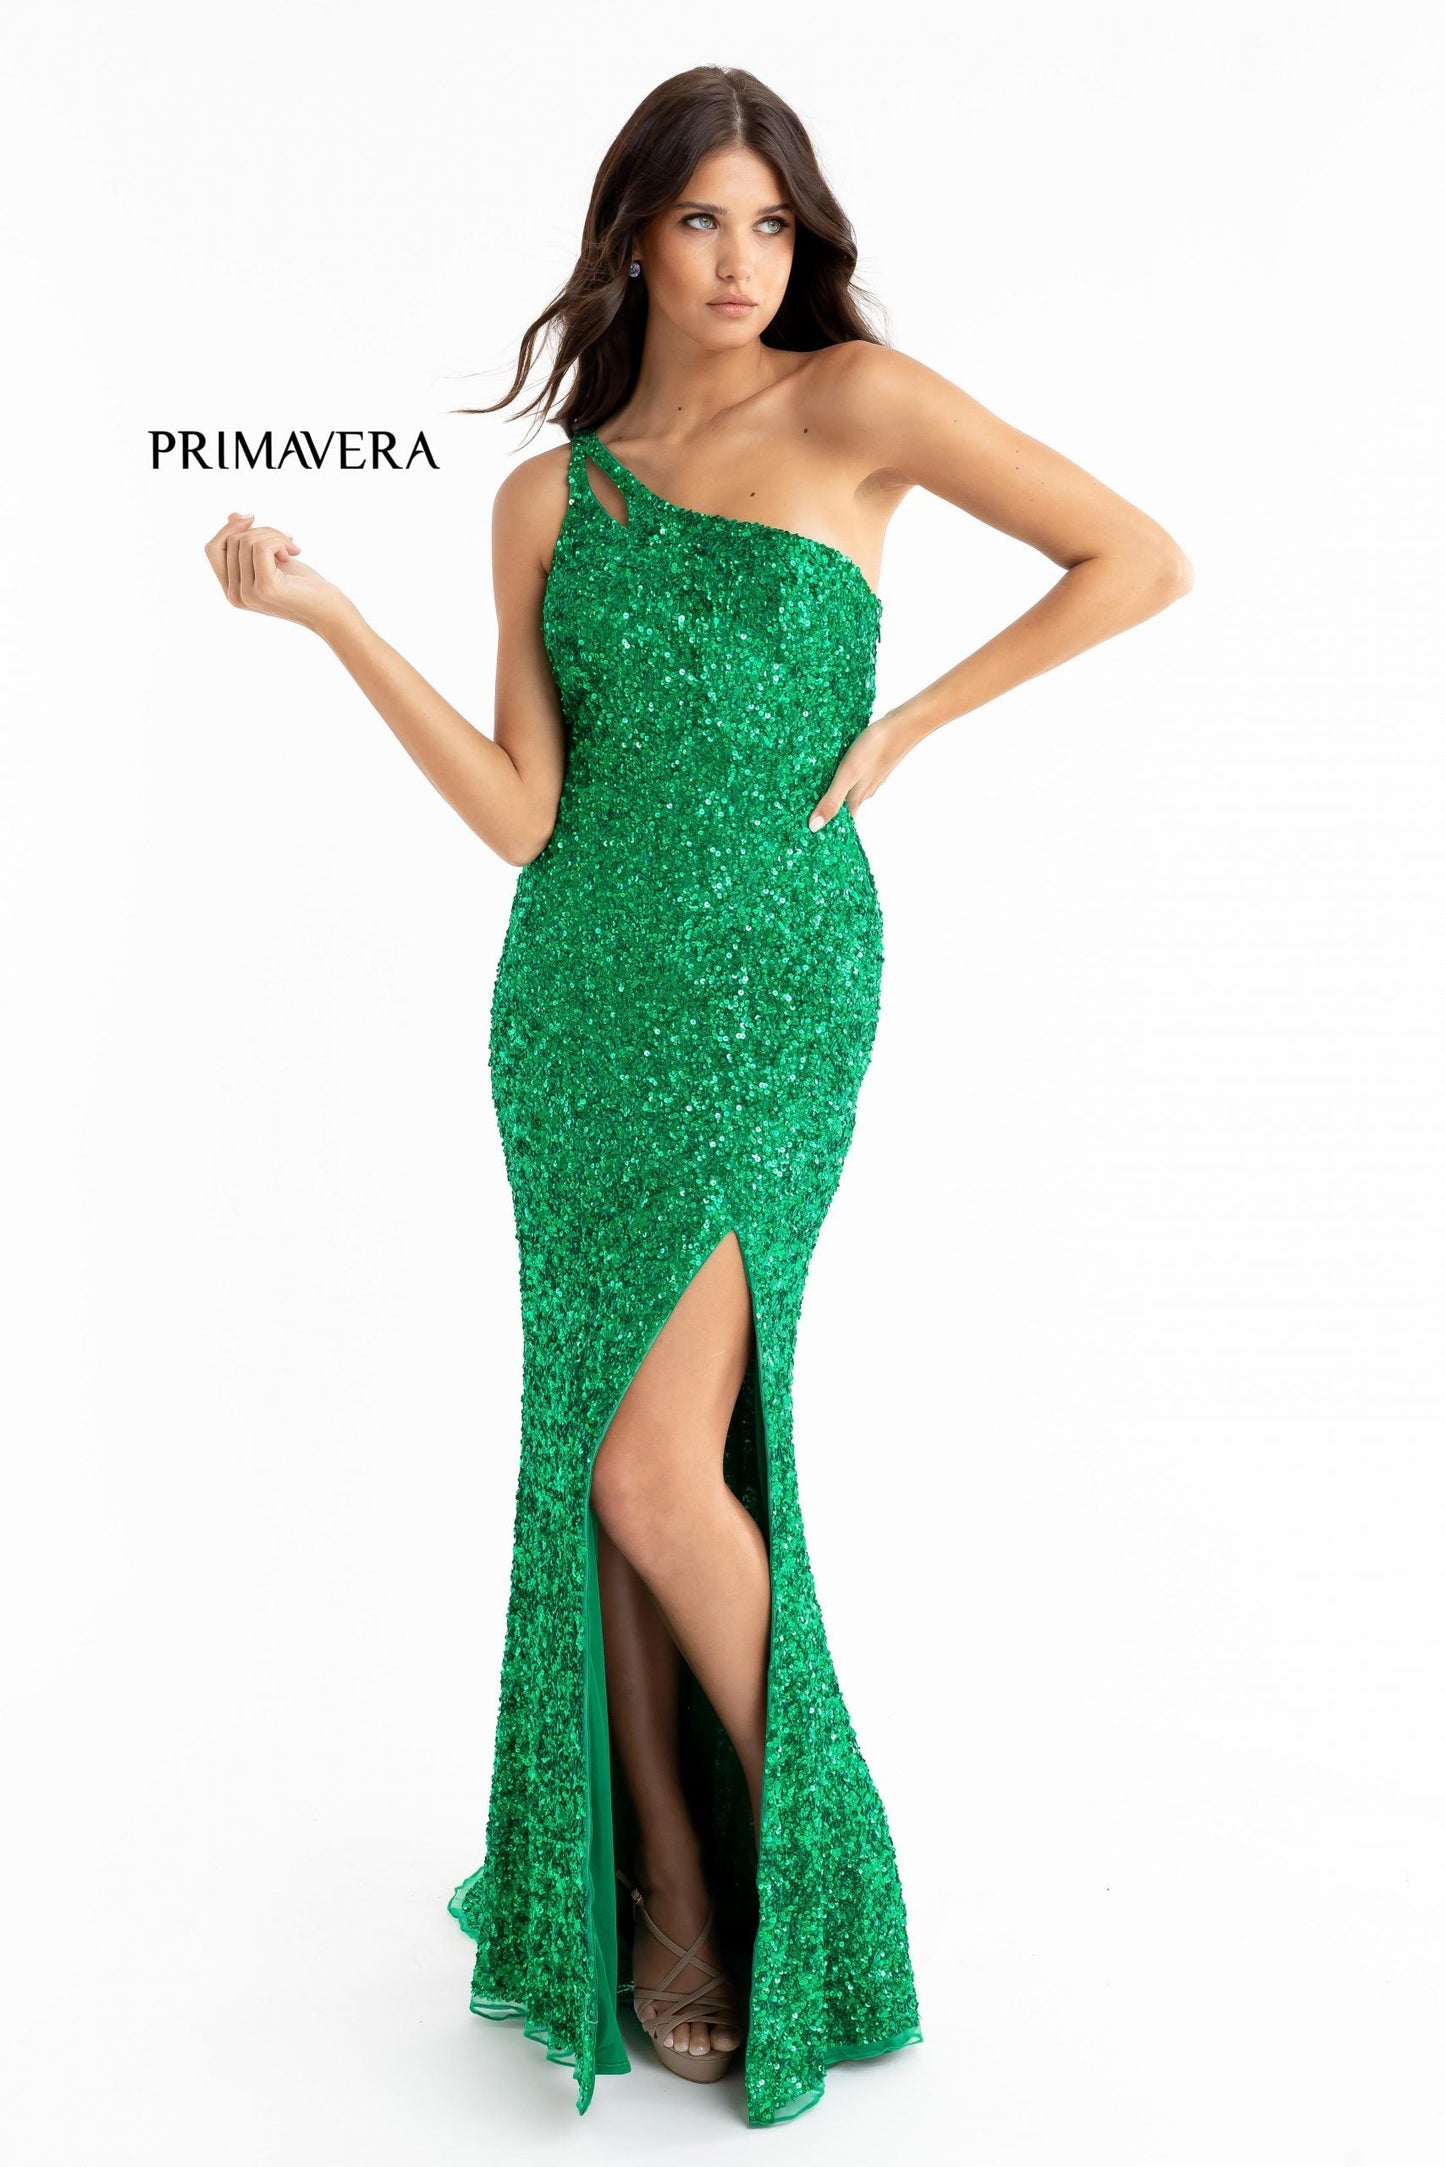 Primavera Couture 3761 Size 2, 4 One Shoulder Prom Dress Sequin Double Strap Back Slit Train Bright Blue